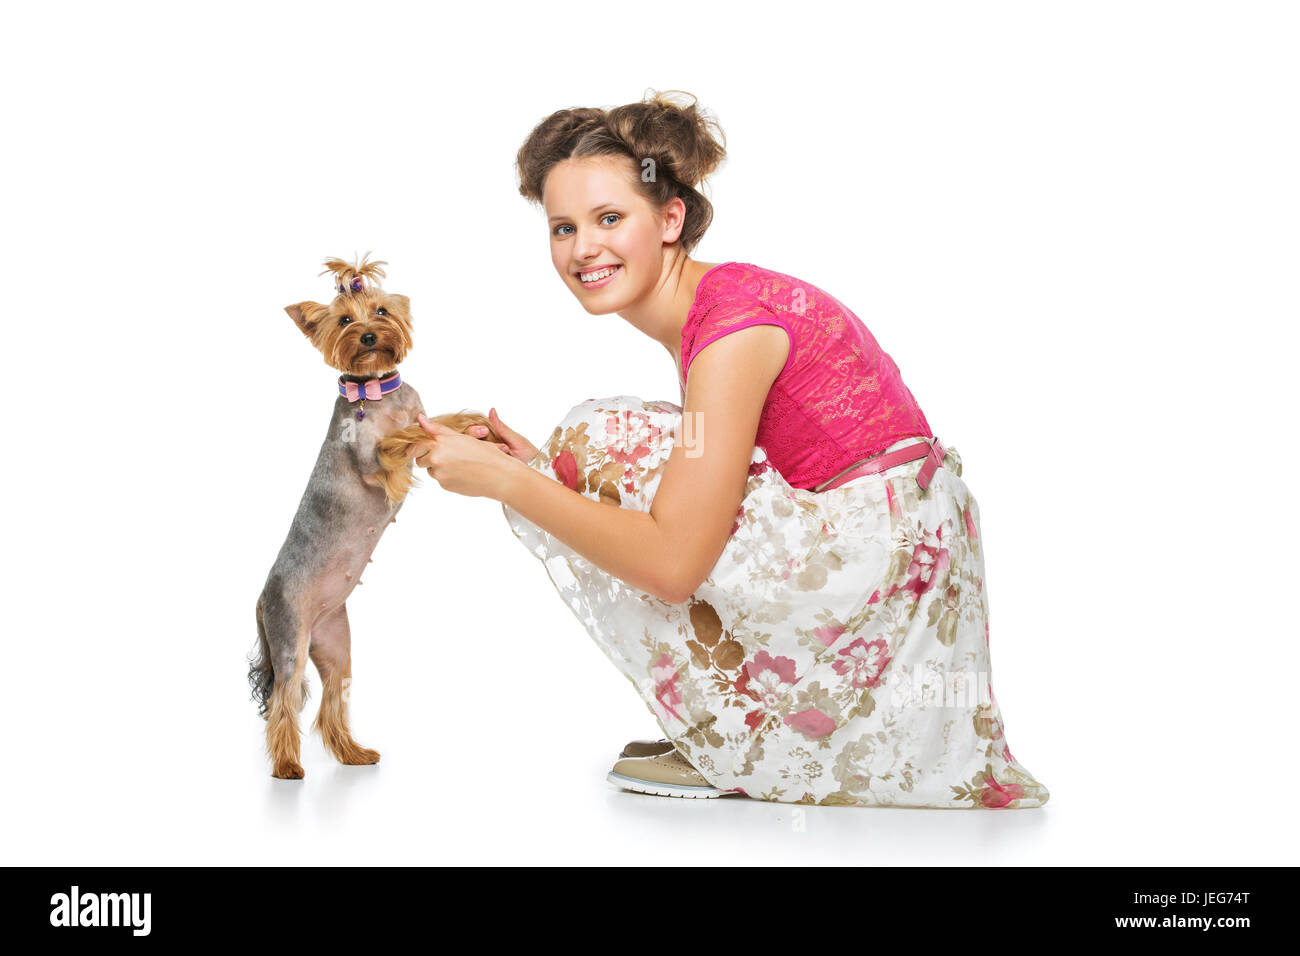 Girl with yorkie dog Stock Photo